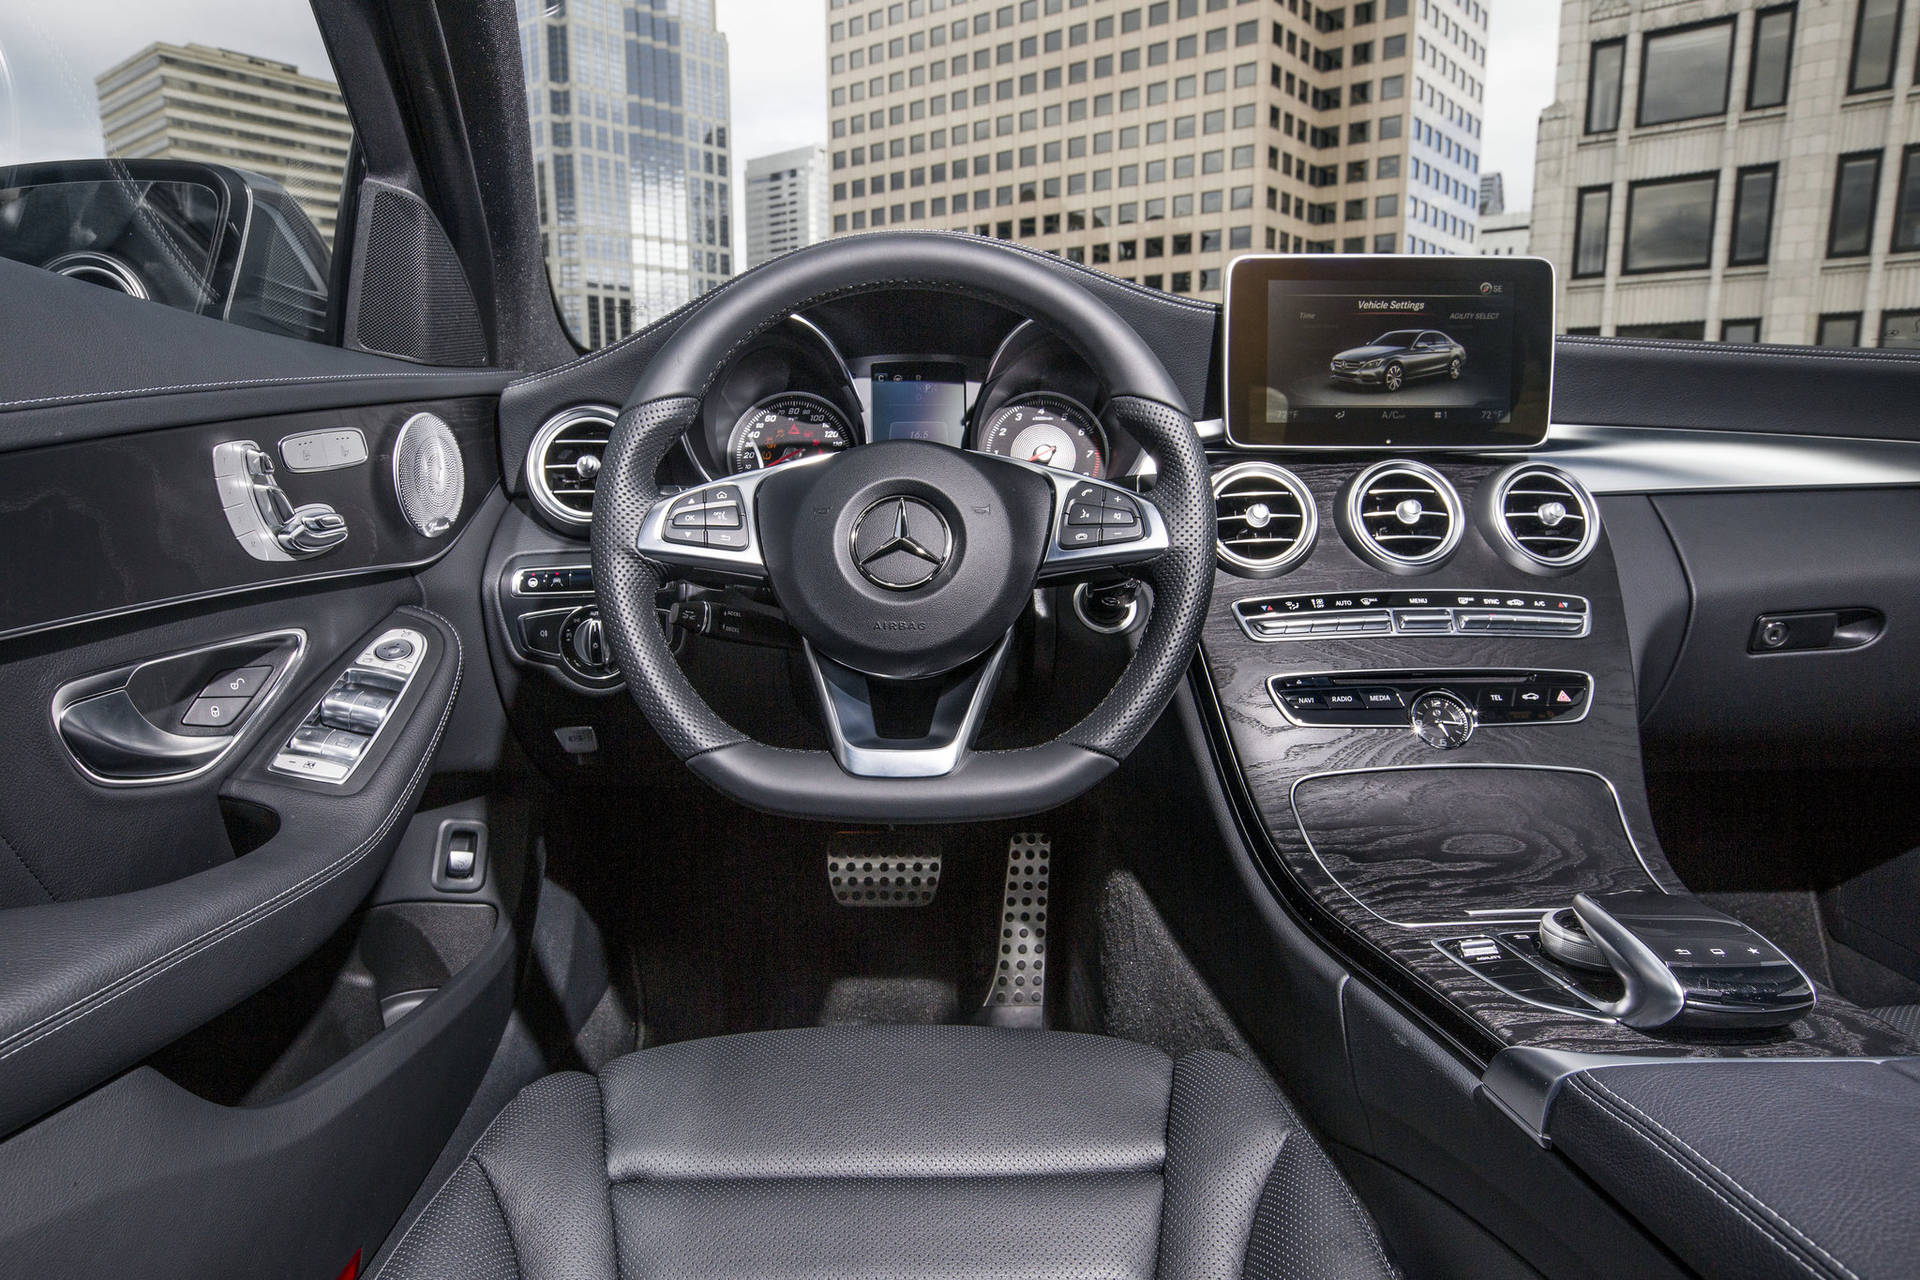 Mercedes Benz C300 Cool Interior Background